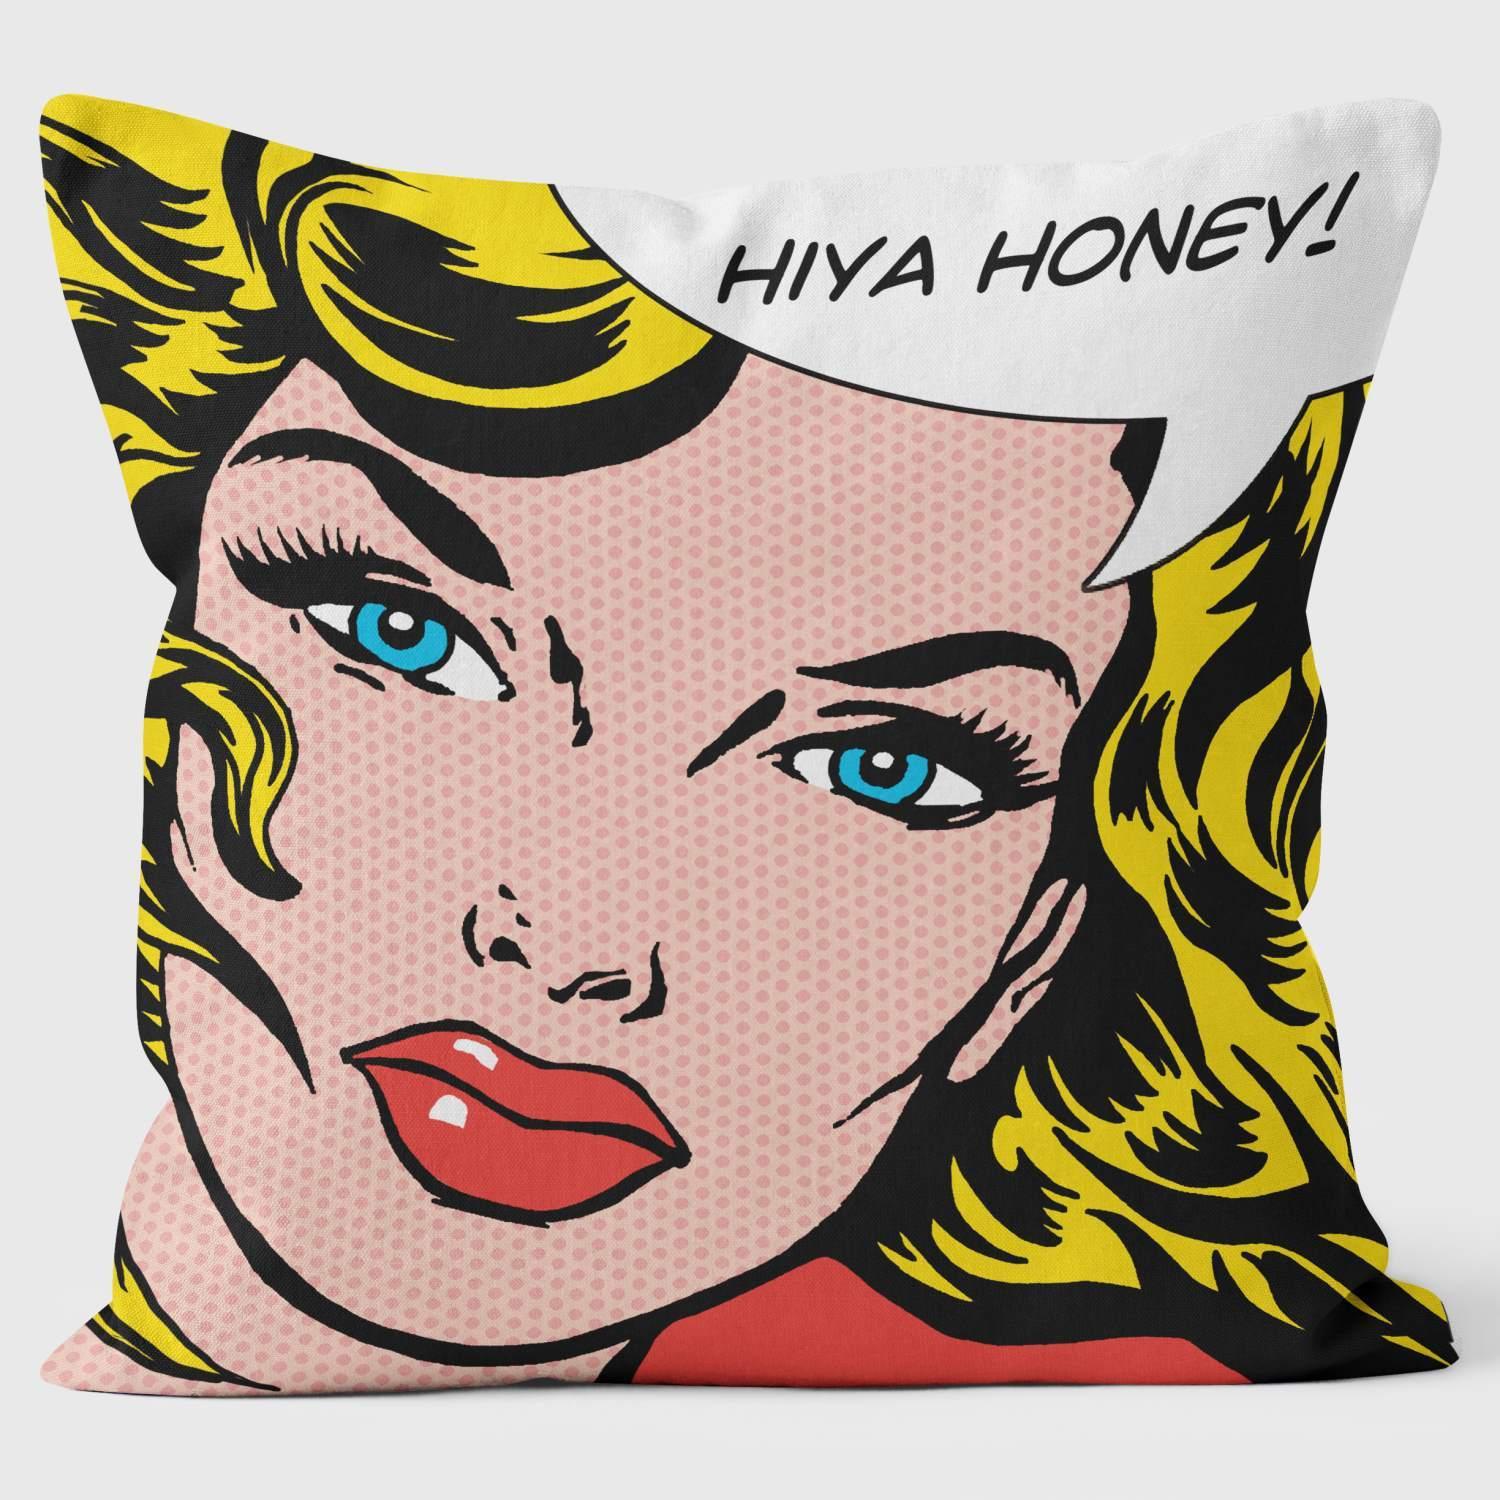 Hiya Honey - Youngerman Art Cushions - Handmade Cushions UK - WeLoveCushions